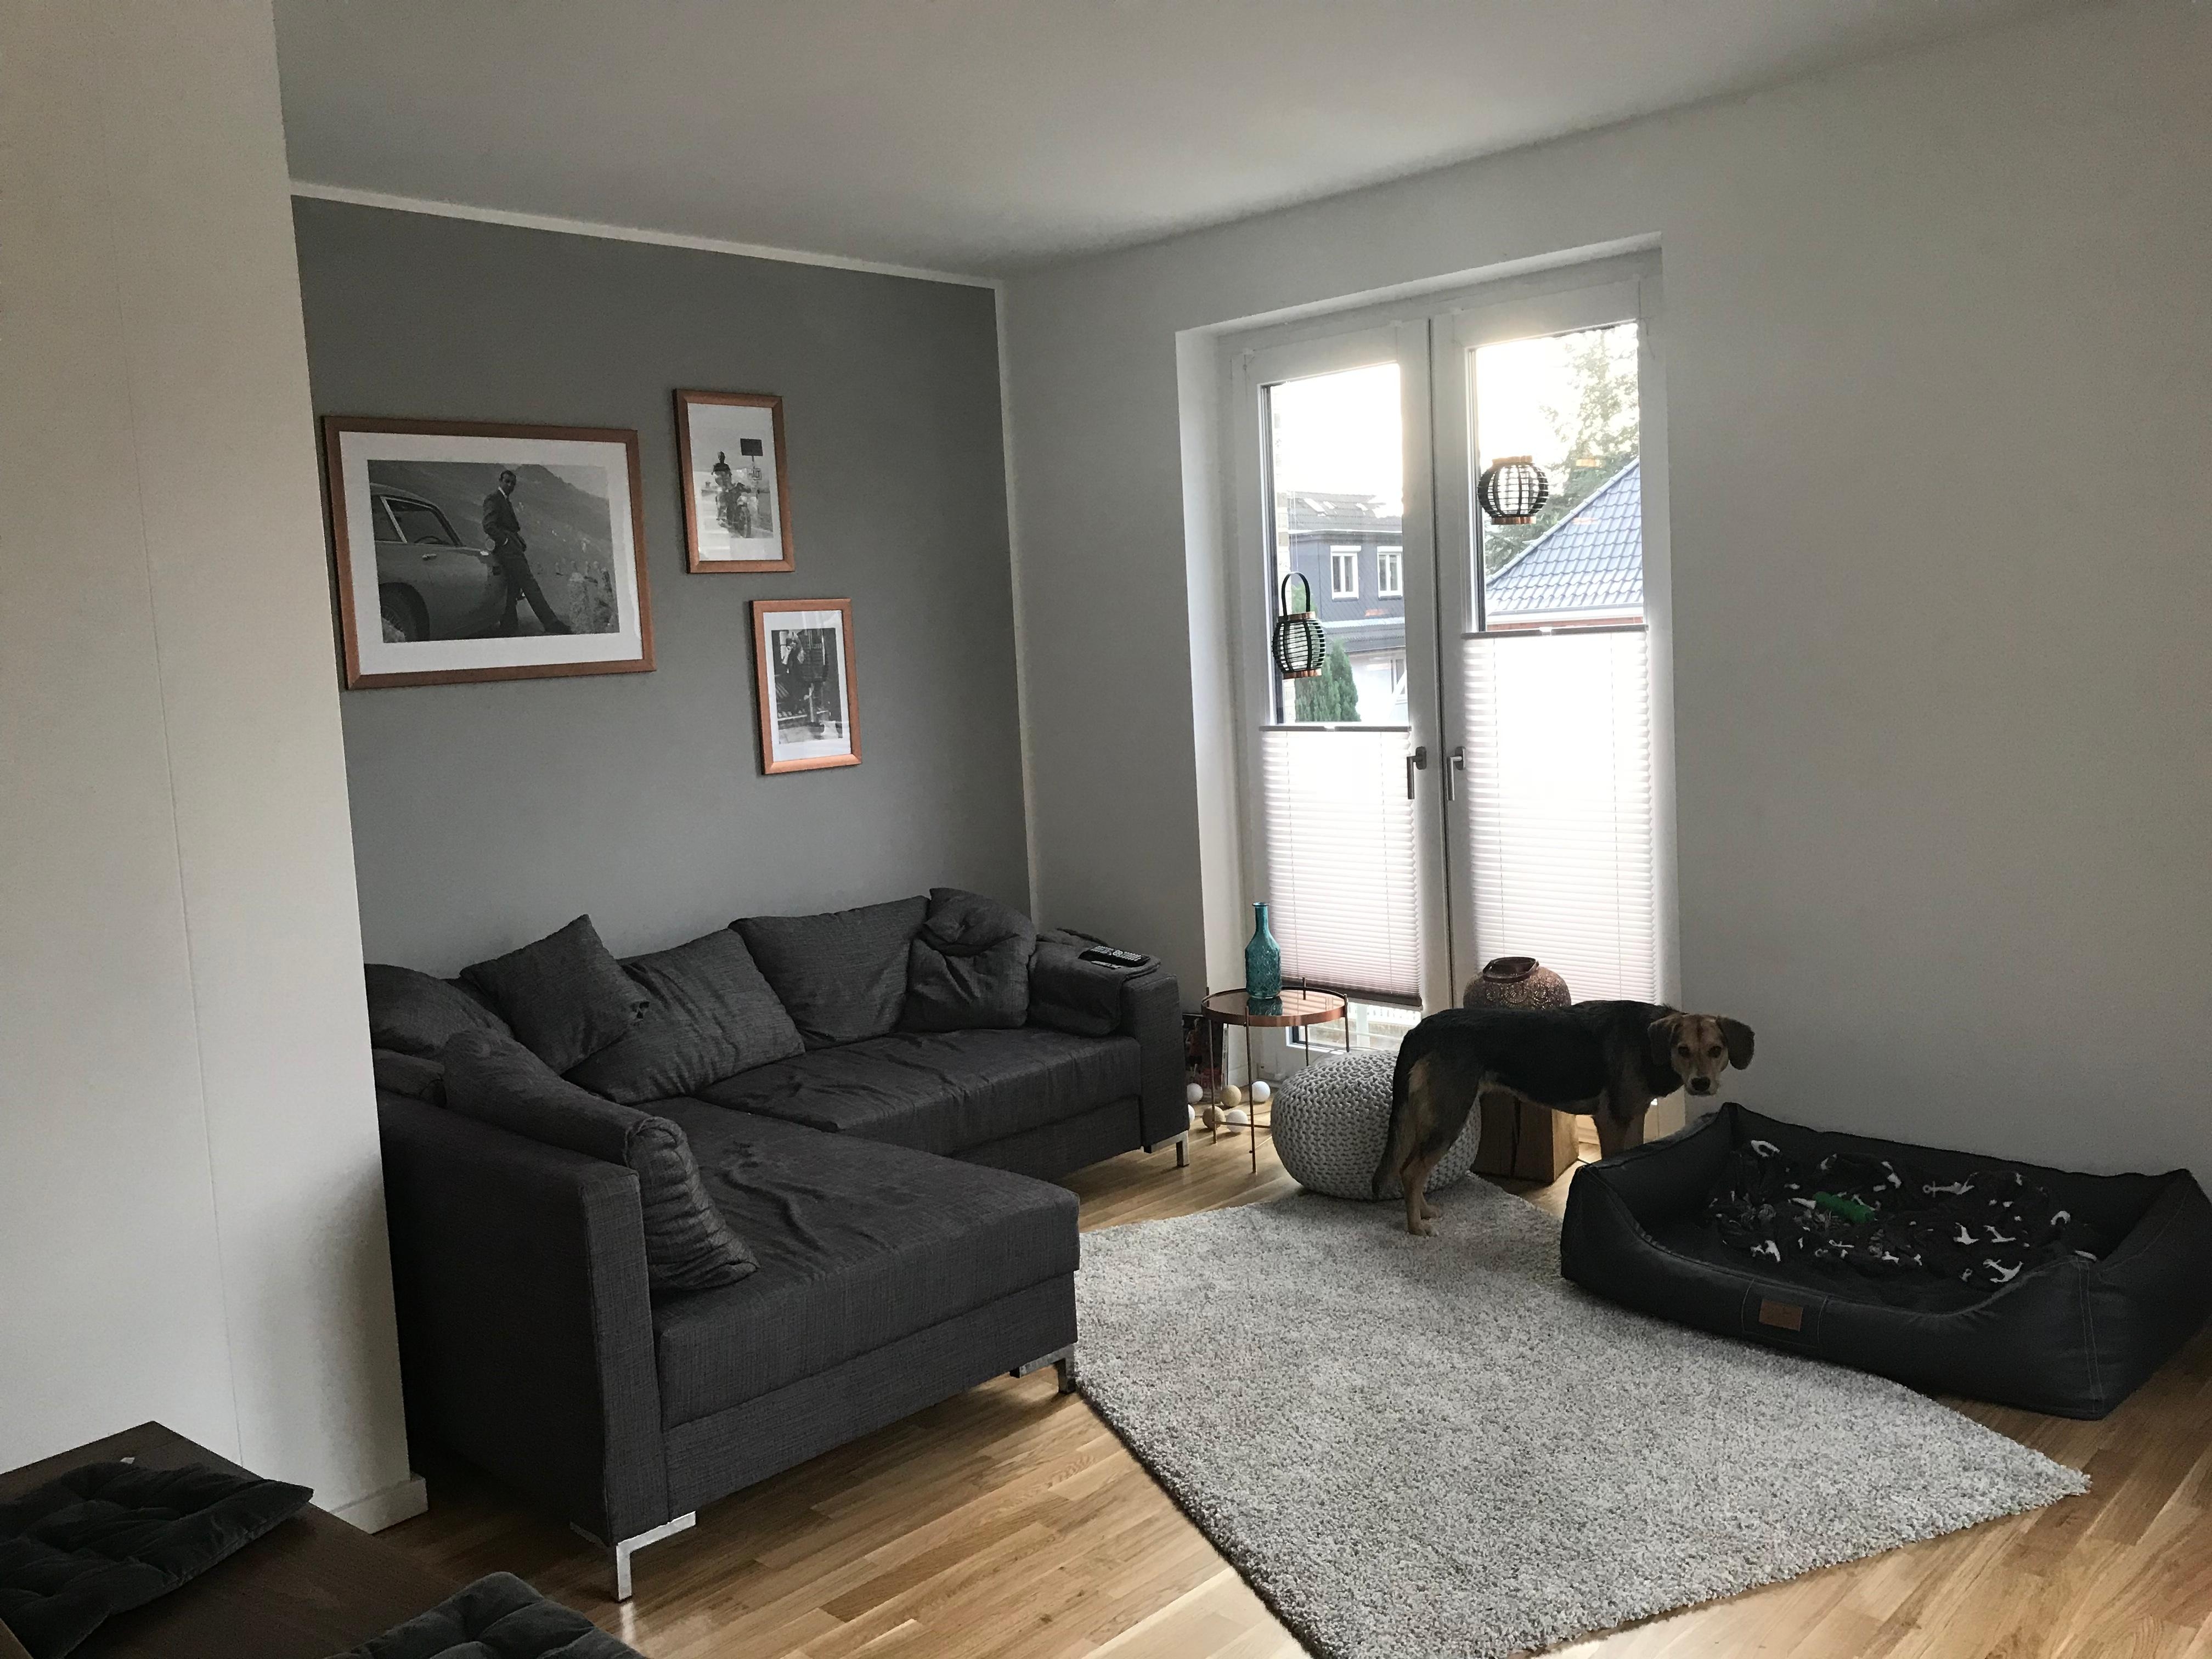 Sunny’s Place #livingroom #grauewand #interior #Wohnzimmer